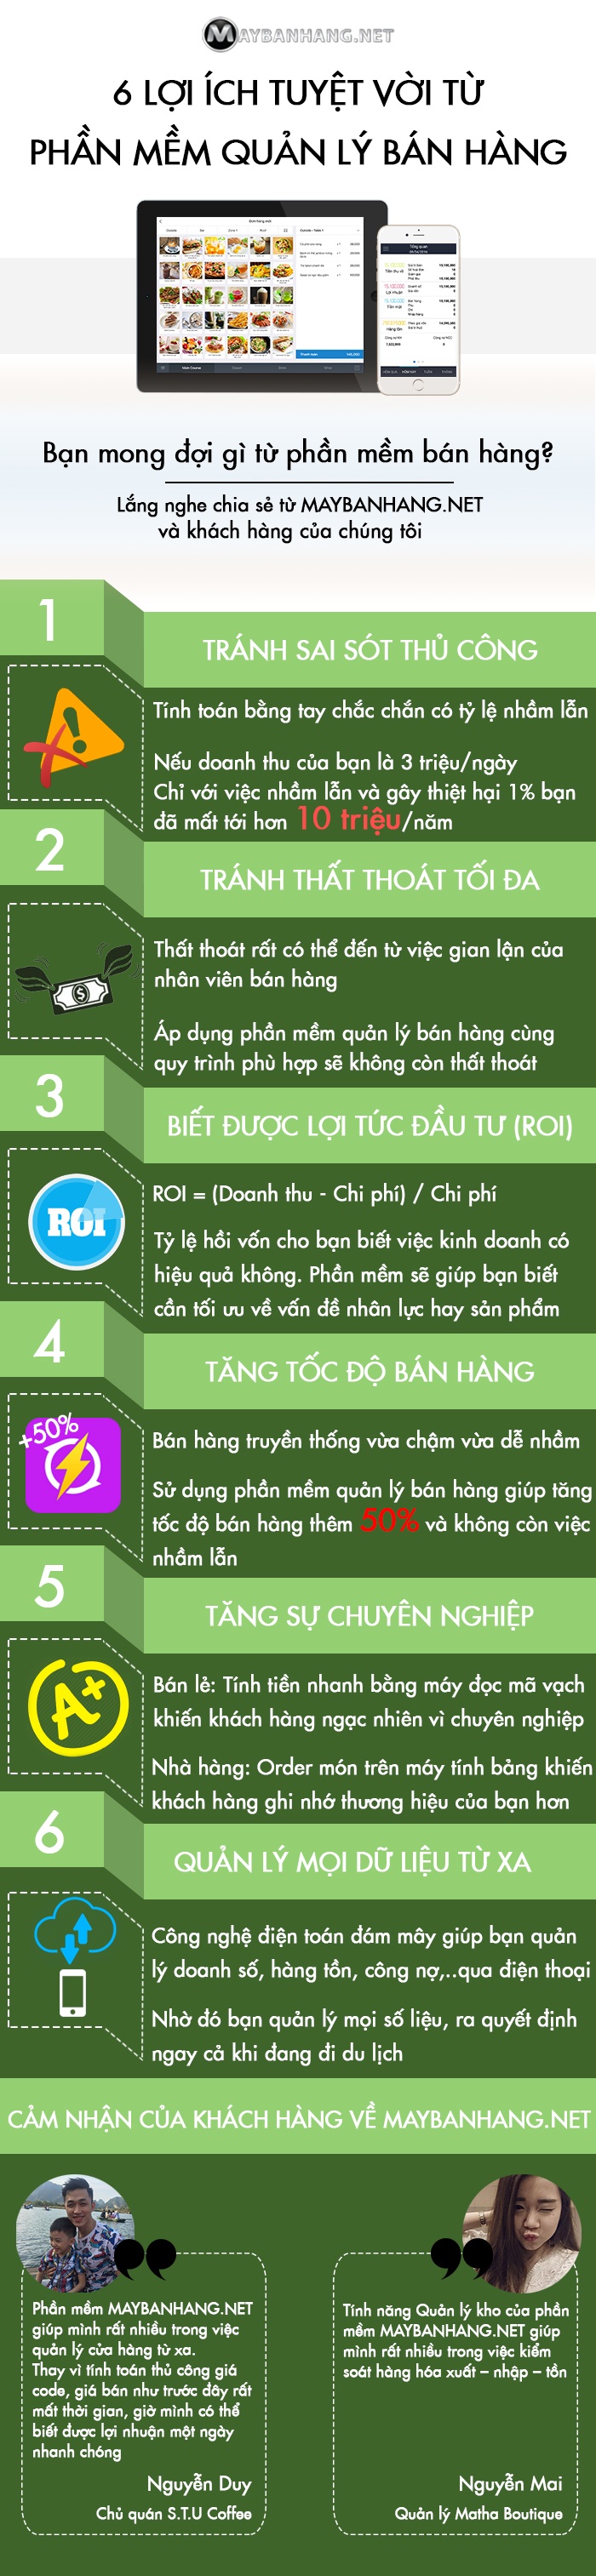 inforgraphic 6 loi ich dung phan mem ban hang